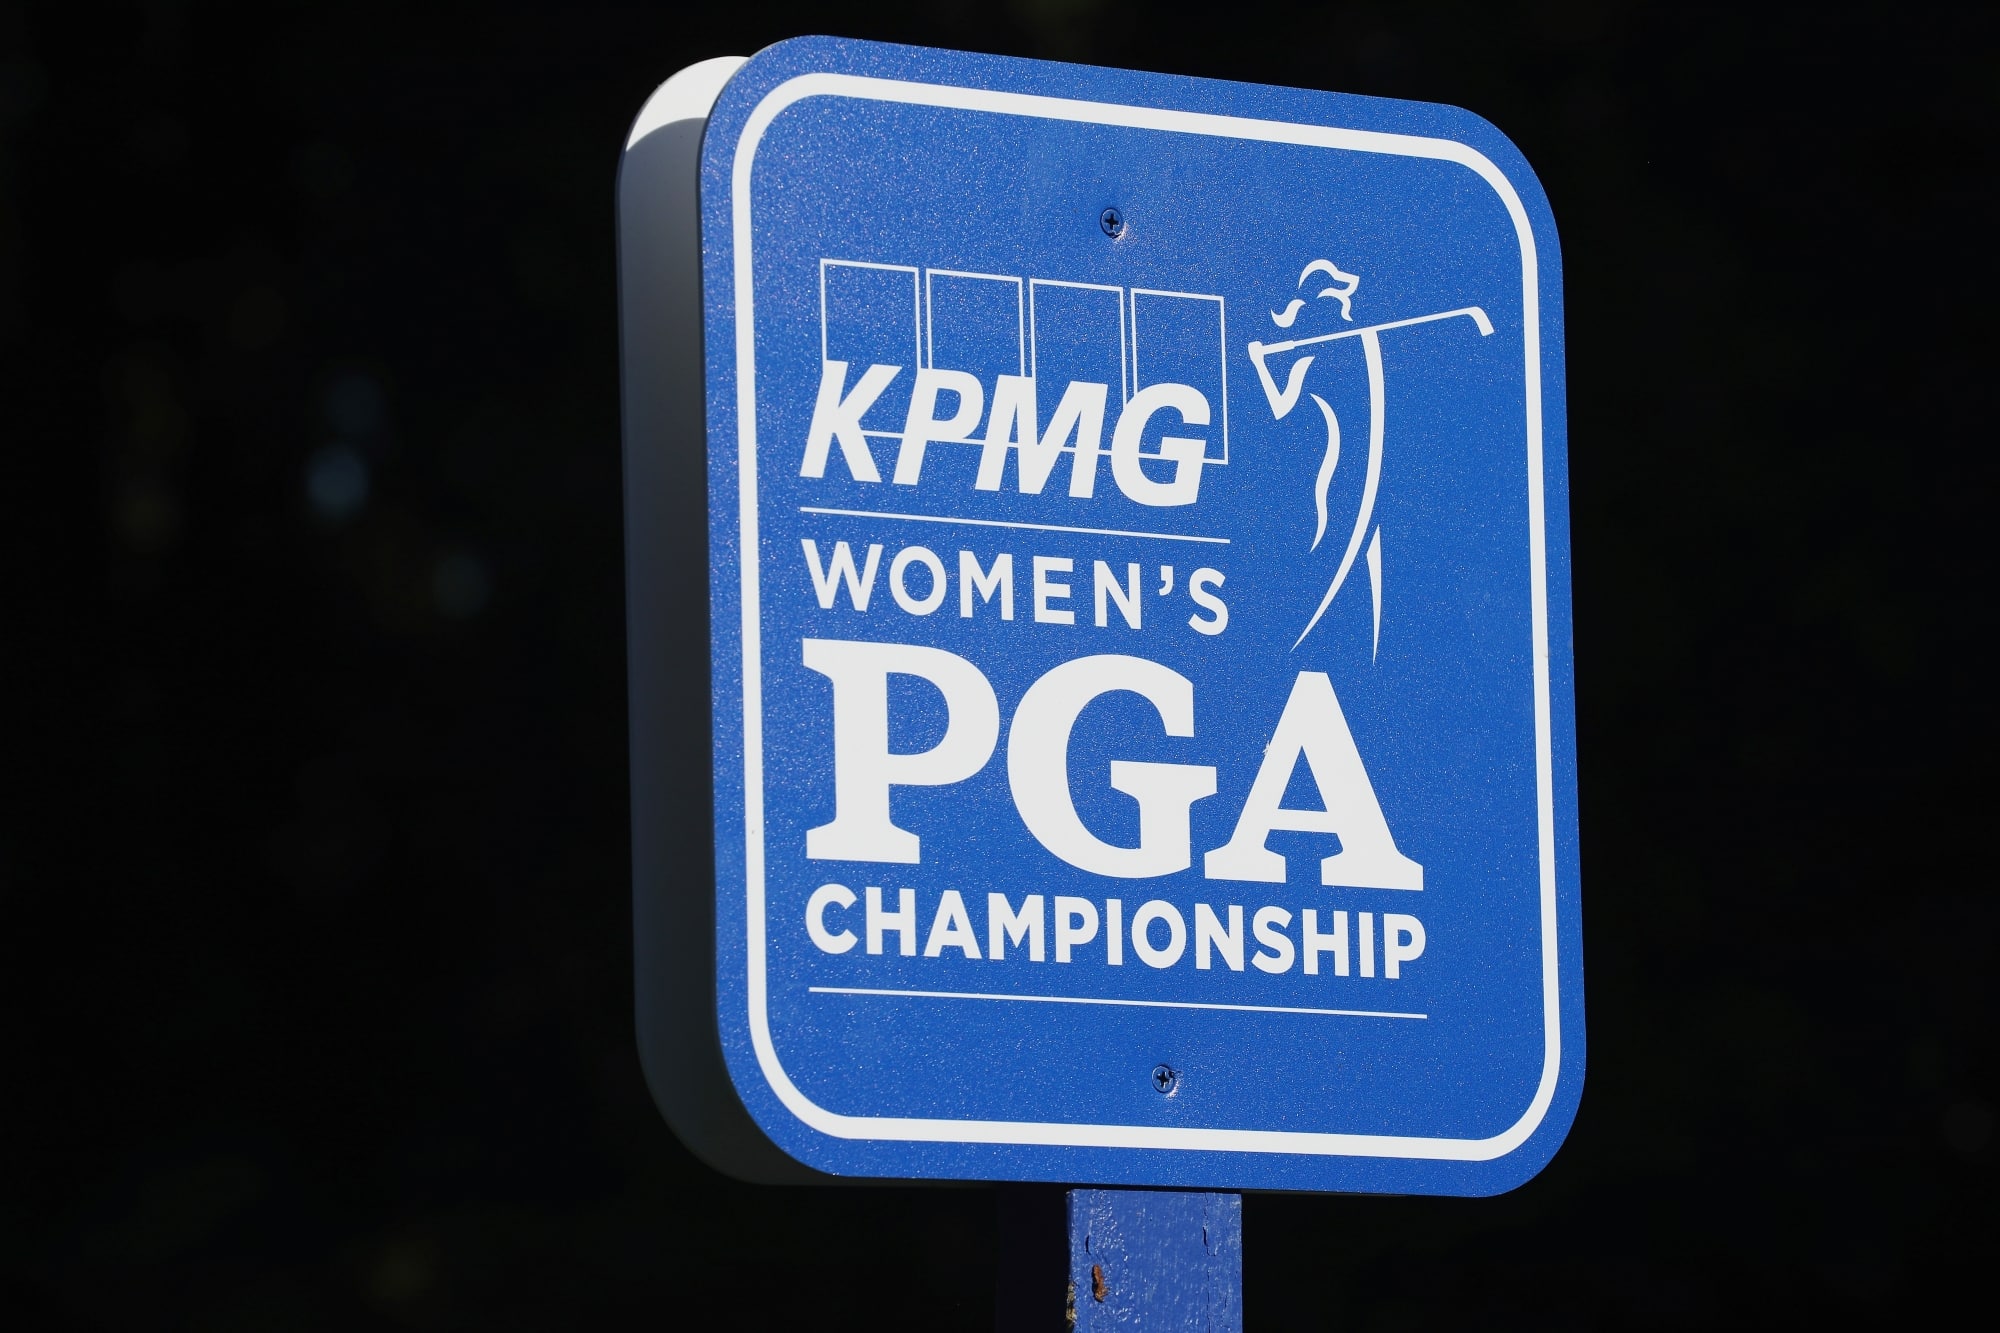 Women's PGA Championship tee times